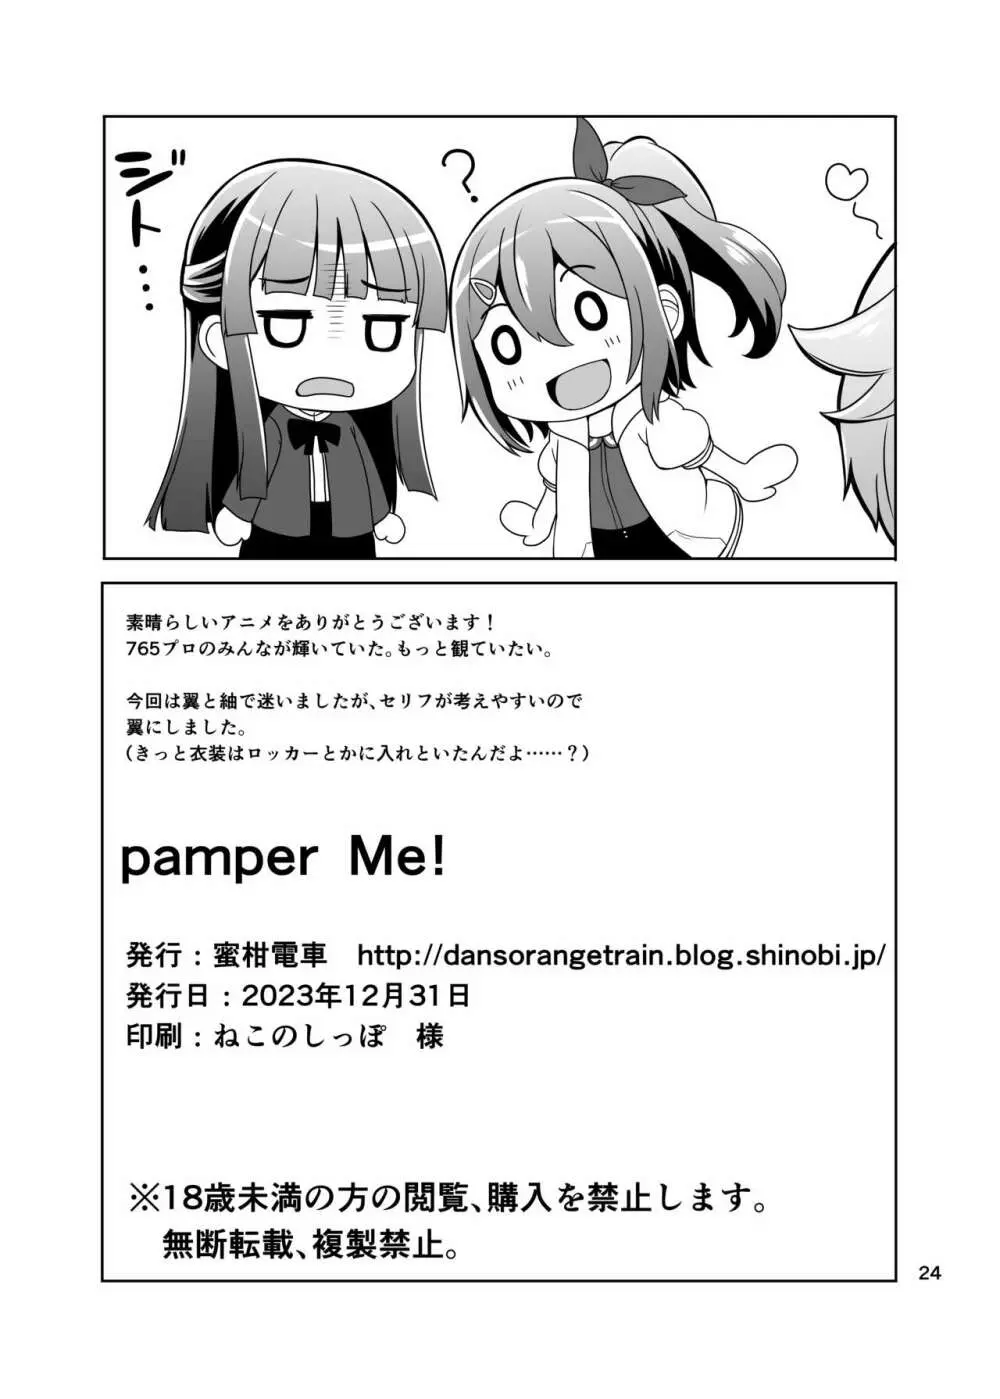 pamper Me! 25ページ